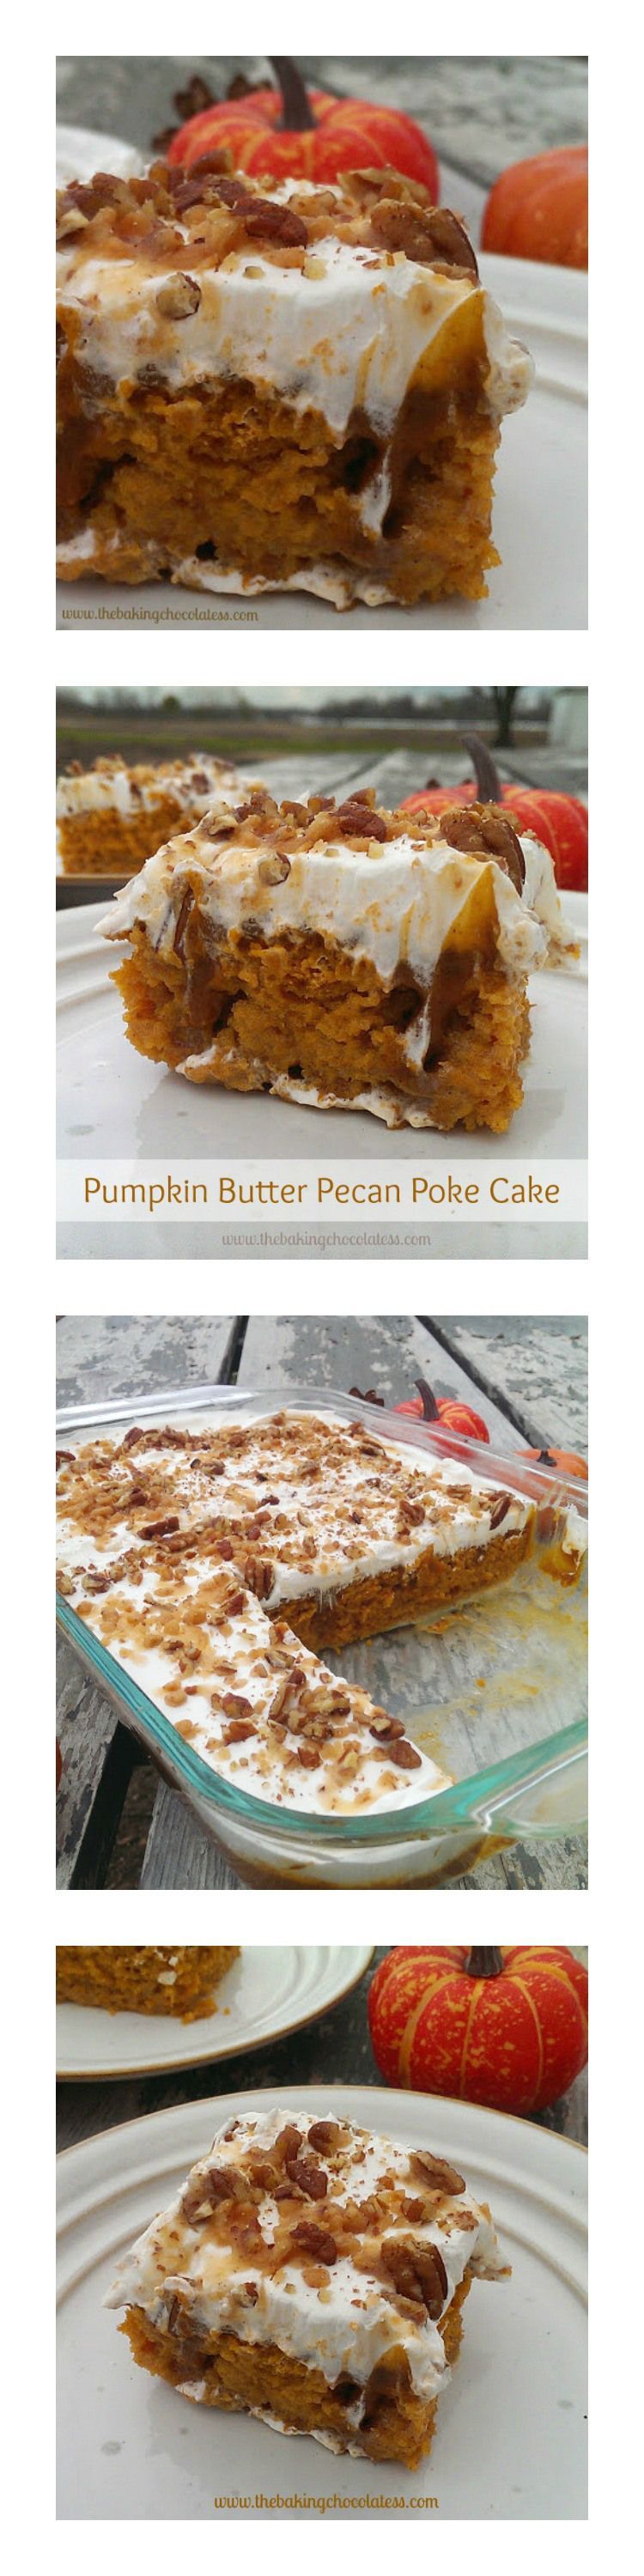 Pumpkin Butter Pecan Poke Cake Recipe